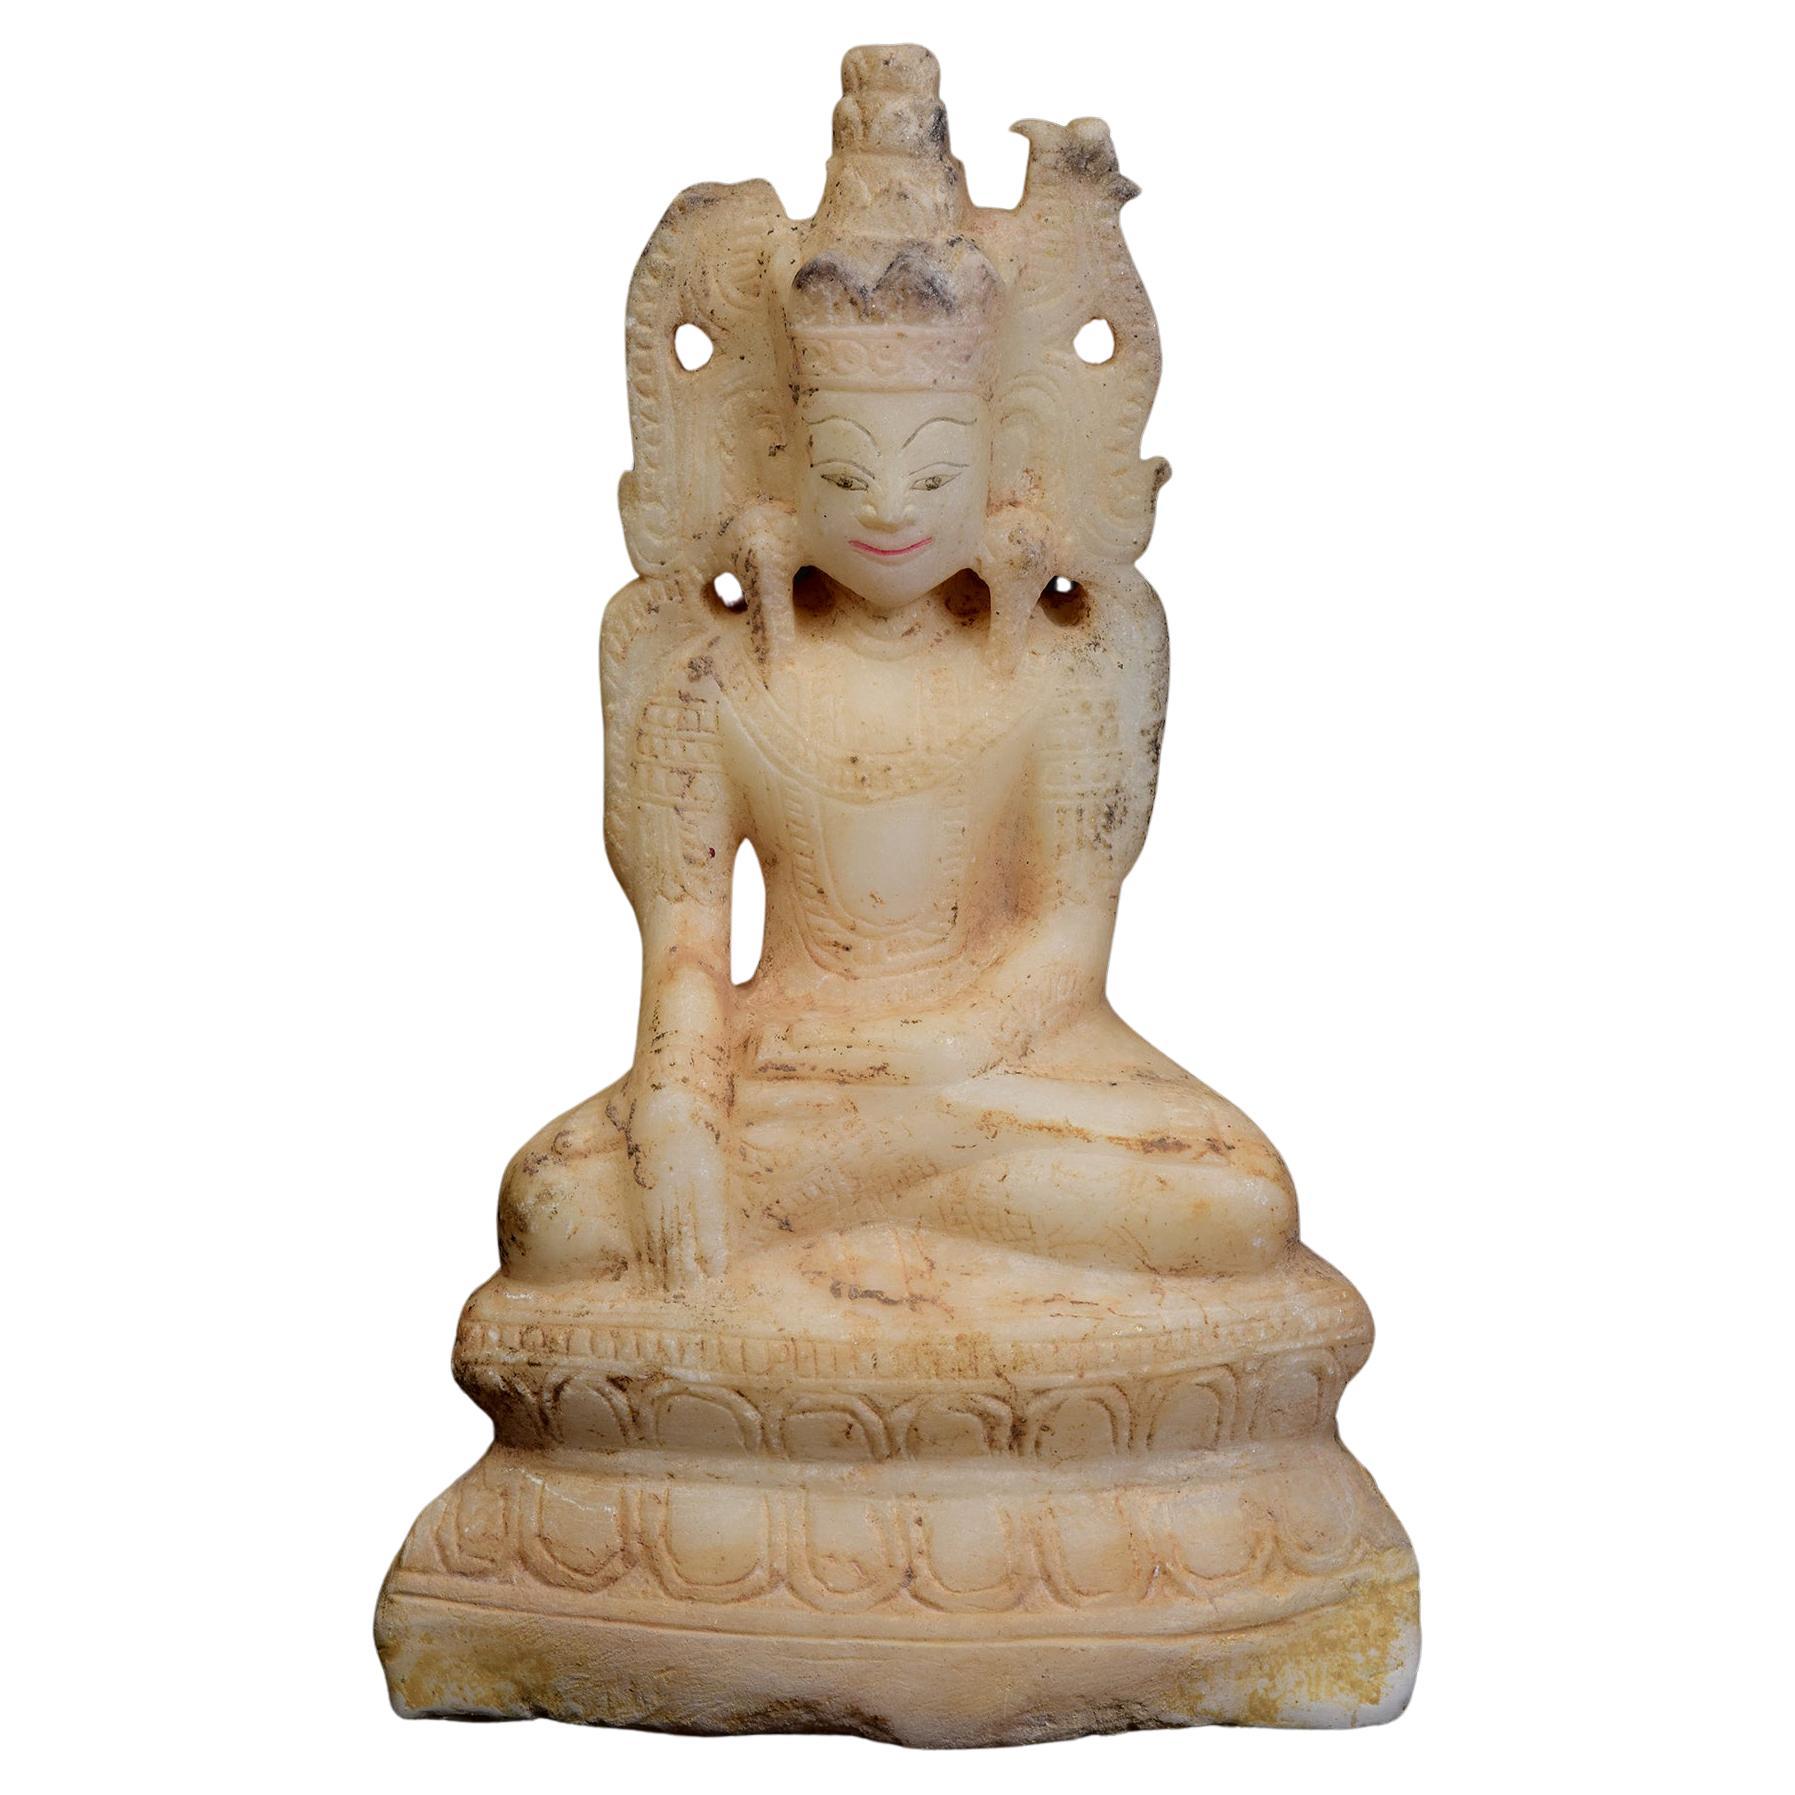 18th C., Shan, Rare Antique Burmese Alabaster Marble Seated King Buddha Statue